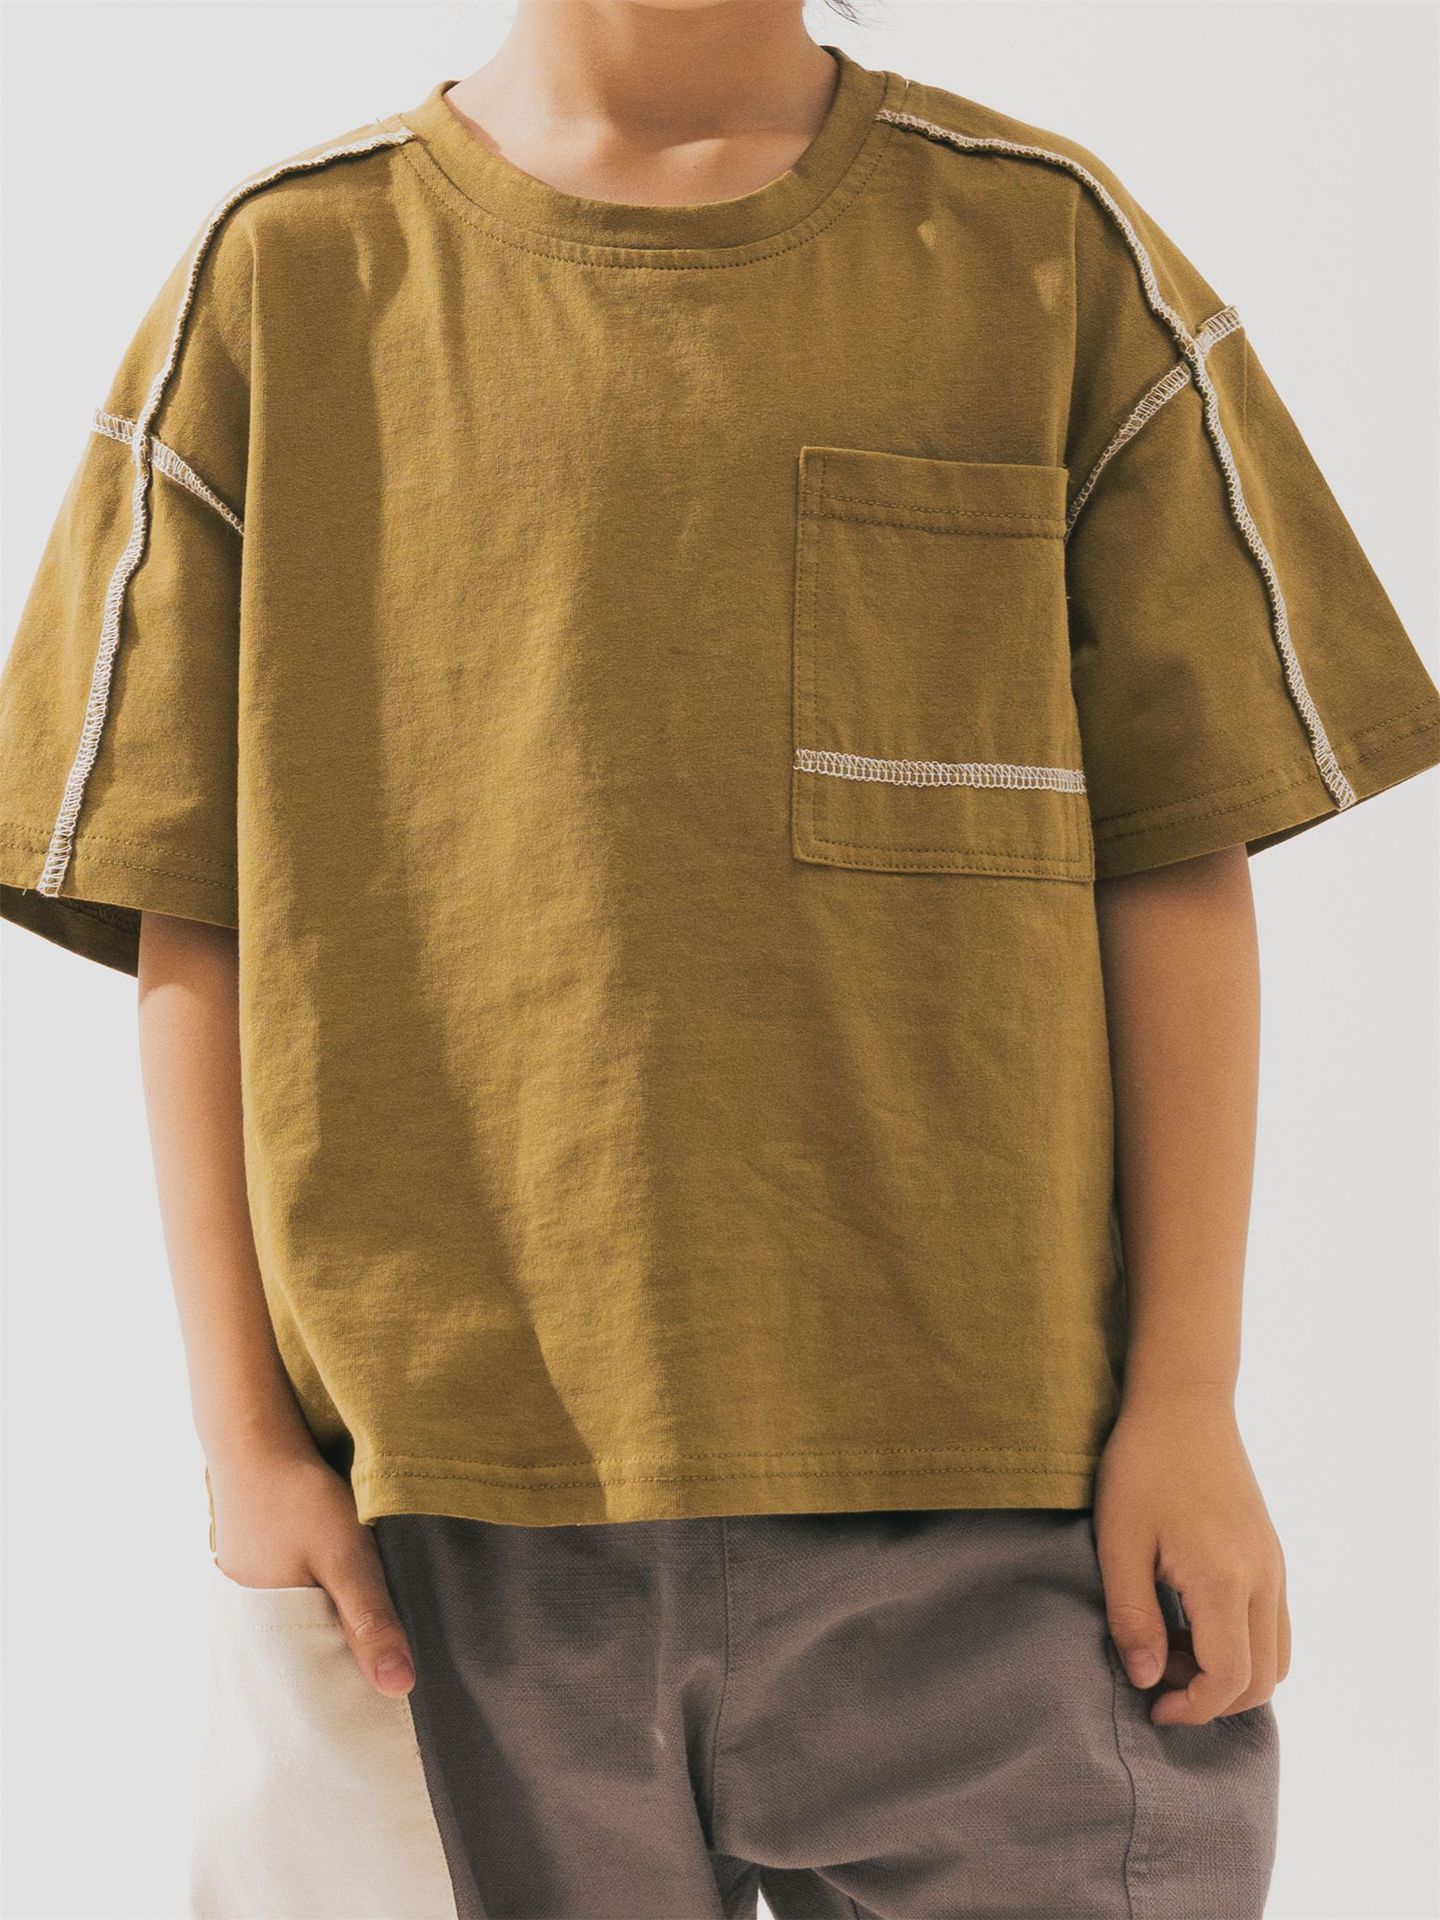 ins夏人気   韓国風子供服    半袖   Tシャツ  トップス   男の子    ファッション  3色【120-160cm】